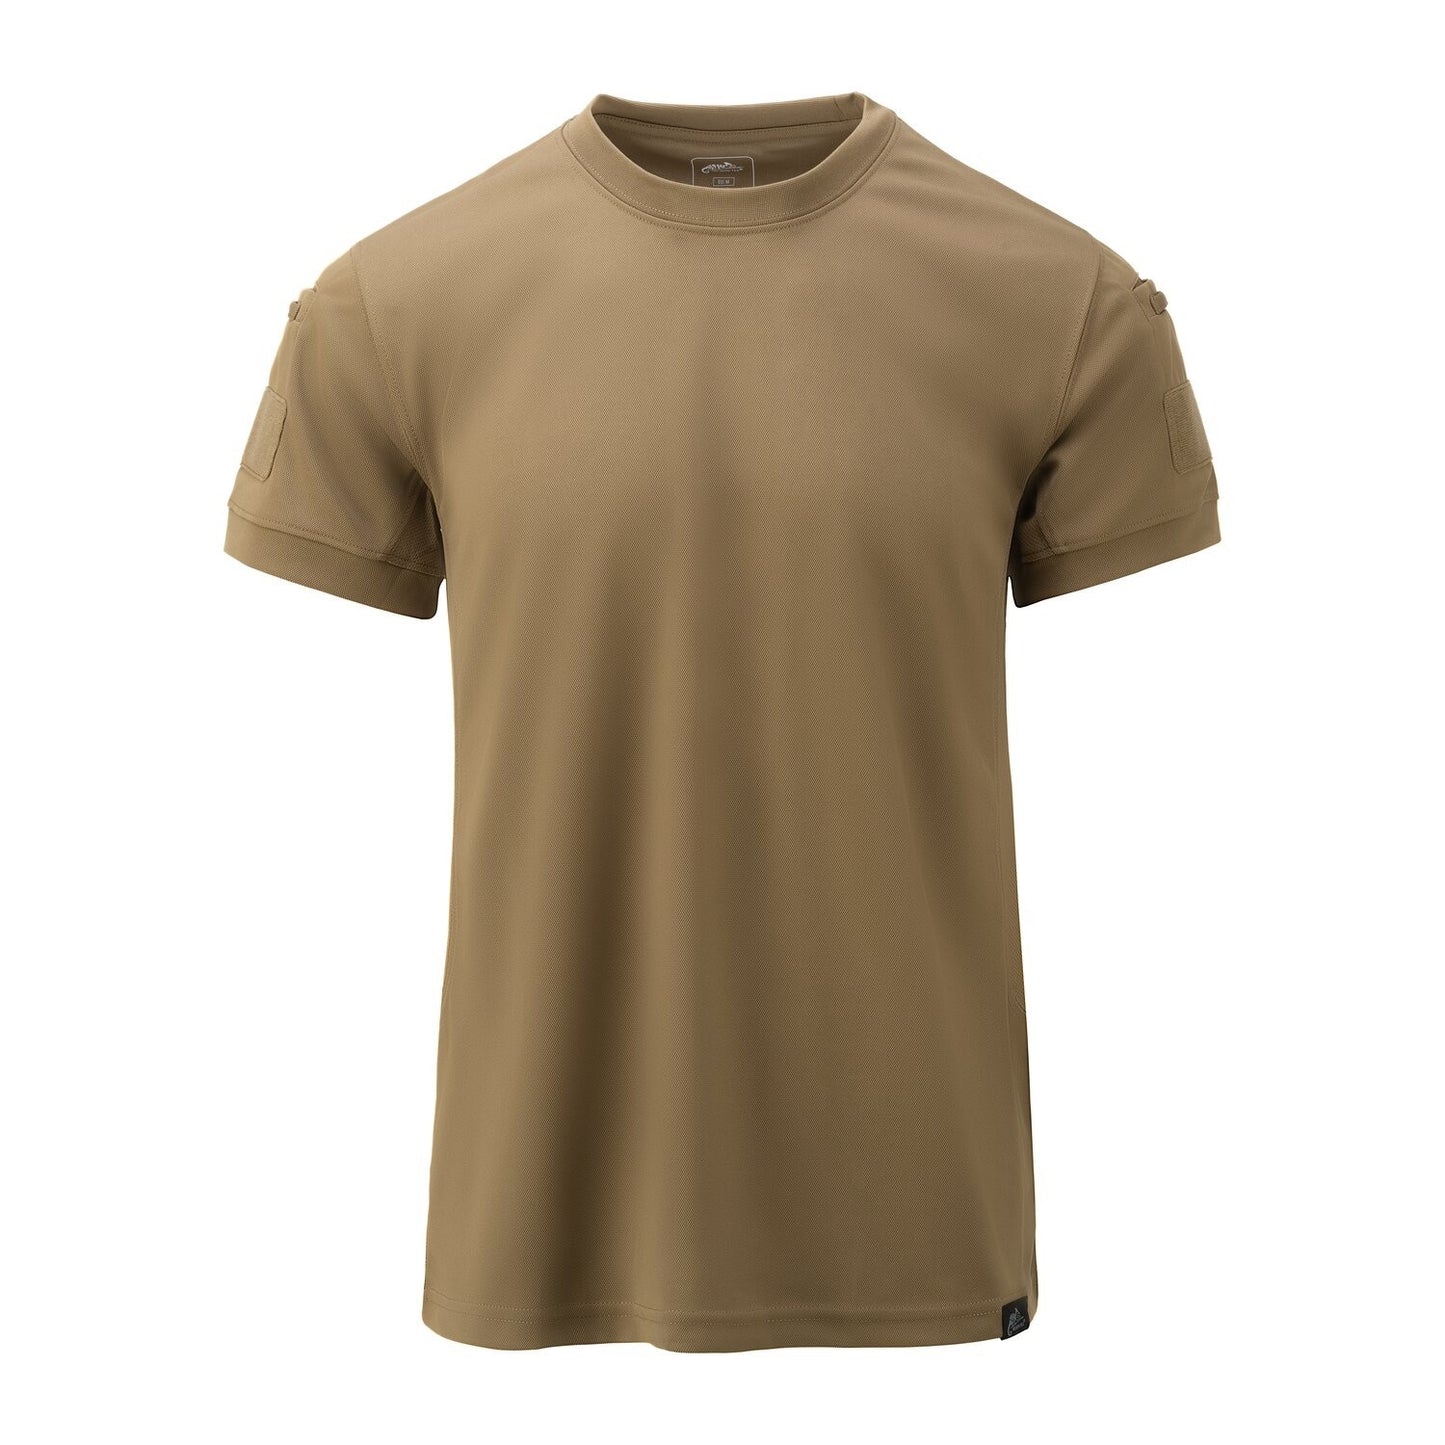 Helikon TopCool® LITE Tactical T-Shirt